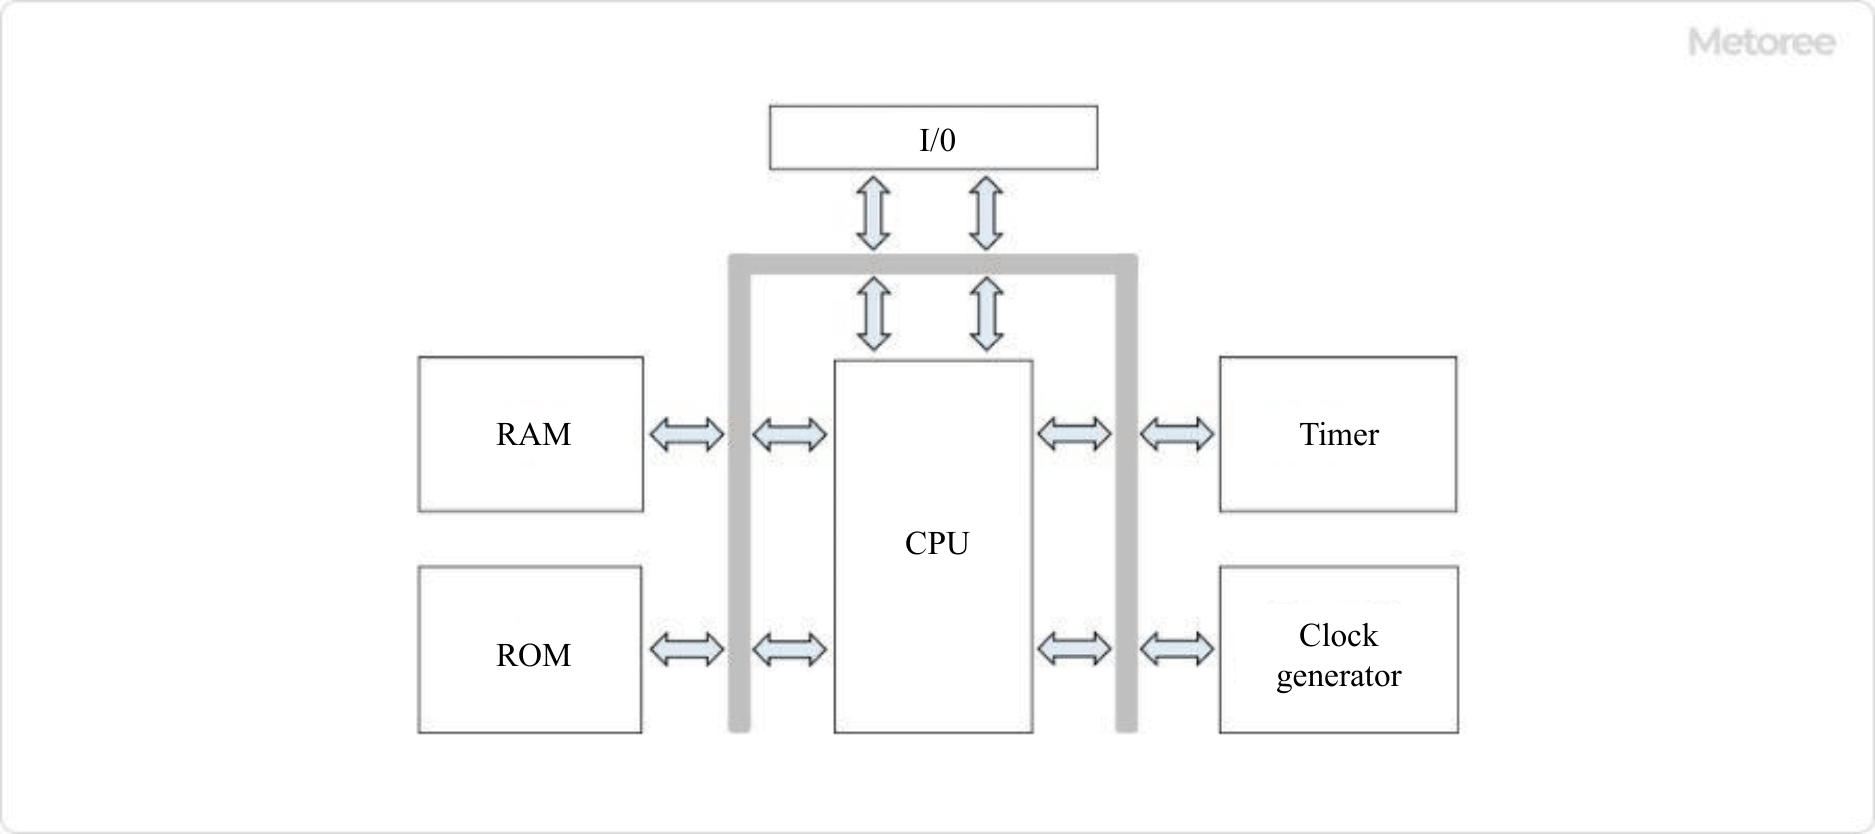 Figure 3. Basic configuration of microcontroller